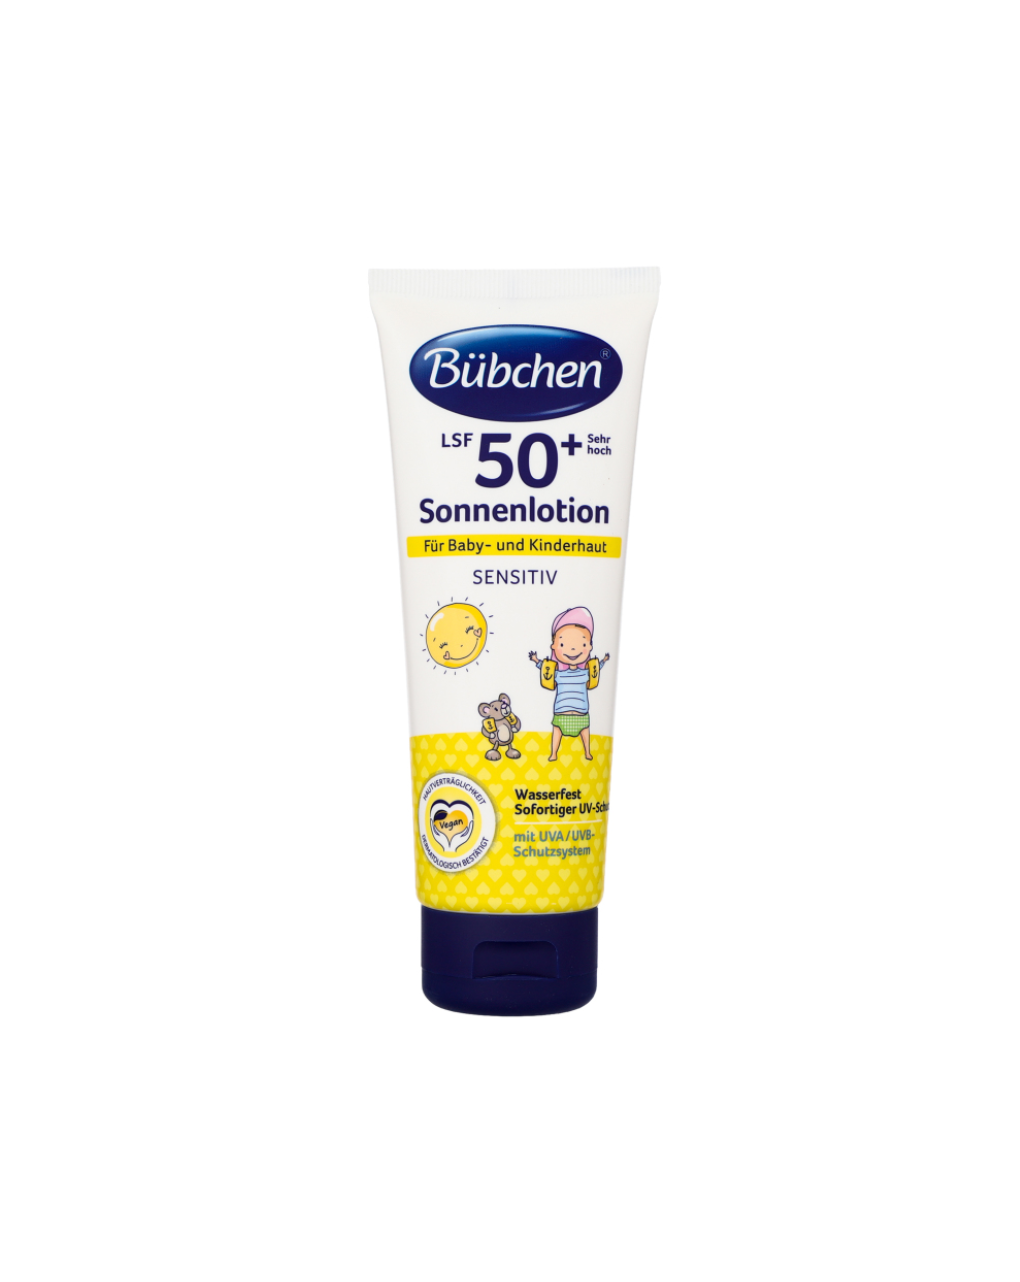 Bübchen sensitive sun lotion spf 50+ water resistant